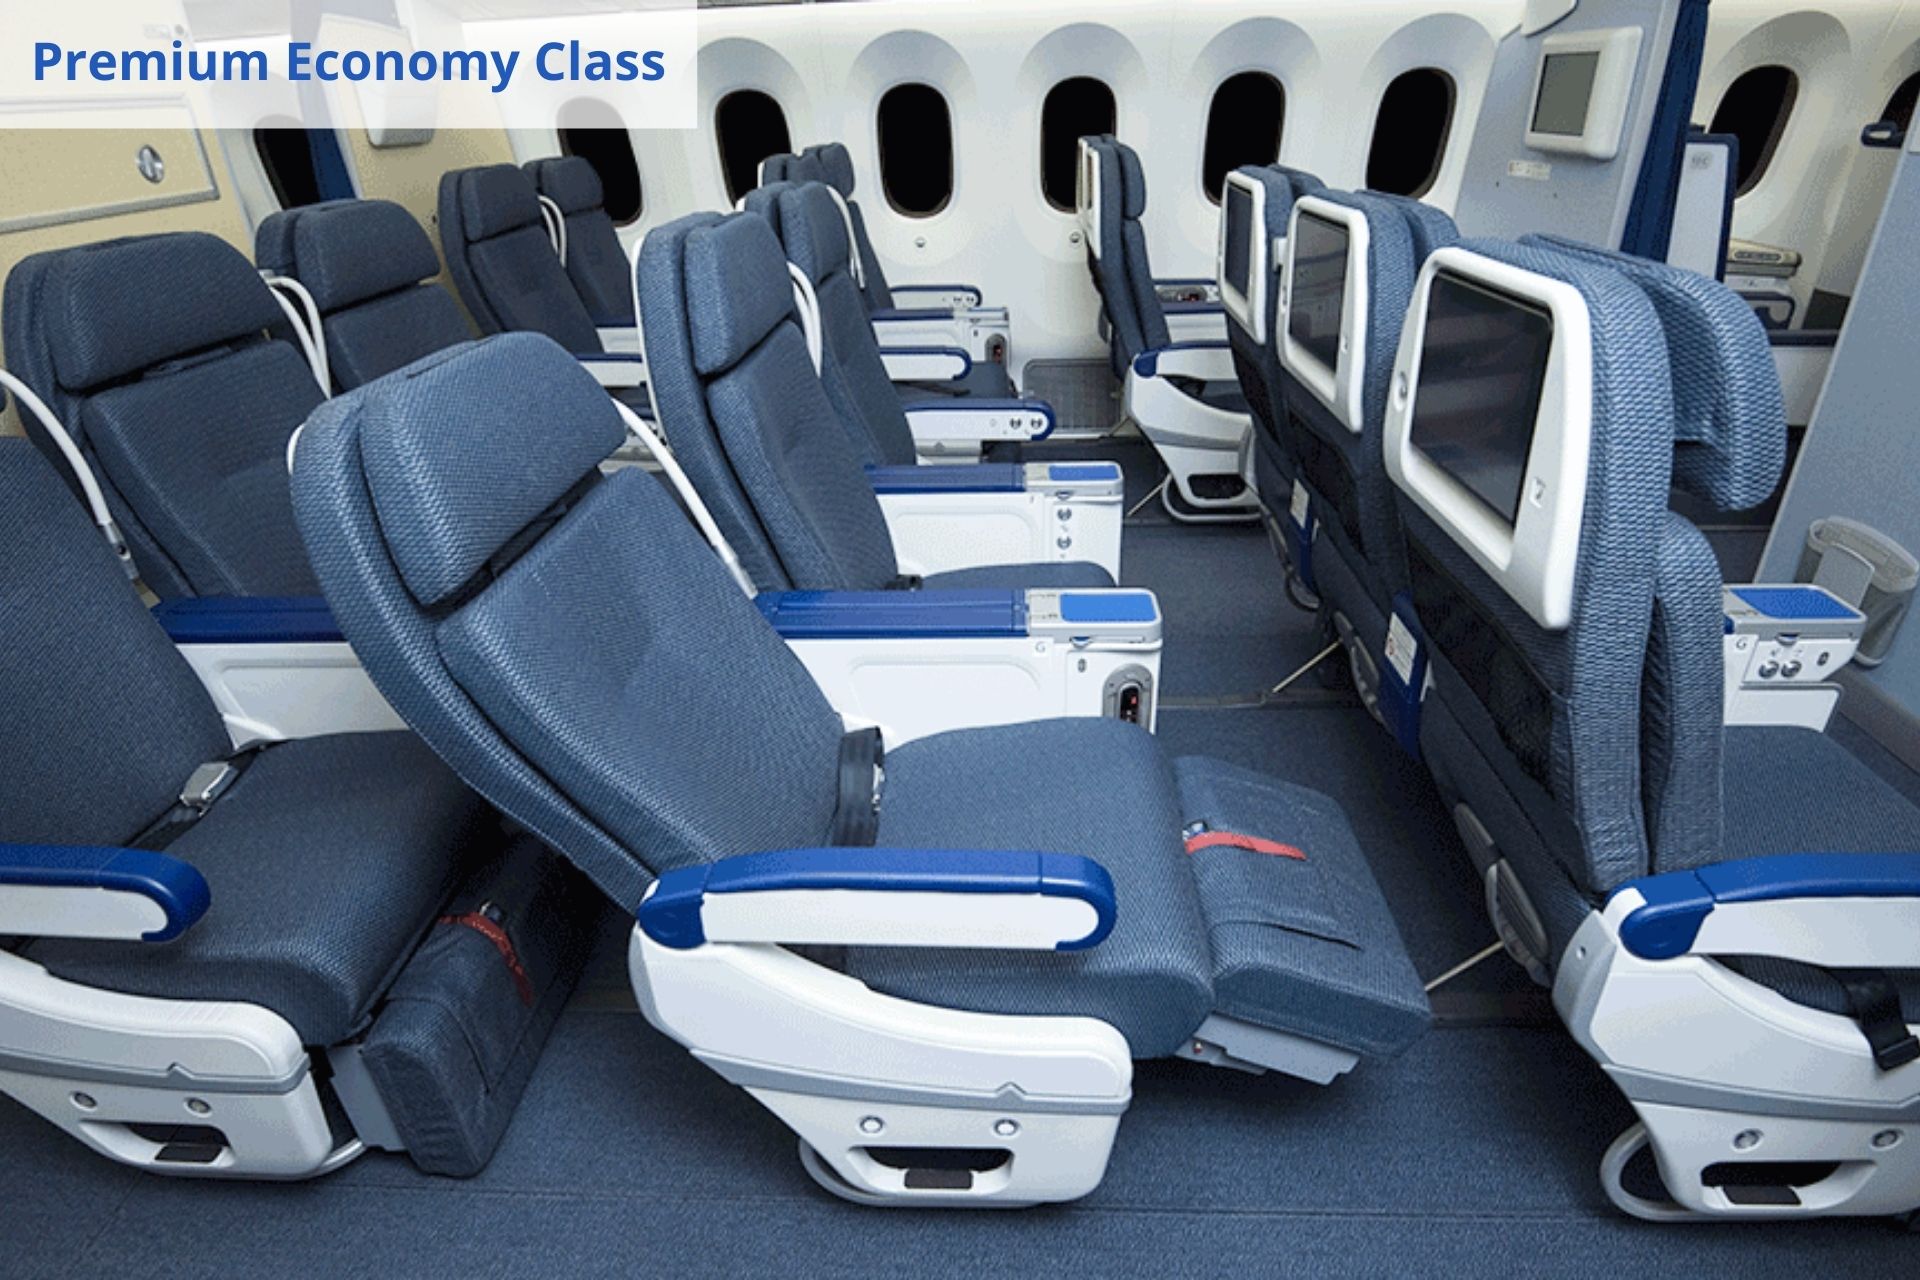 ANA airlines Premium Economy Class